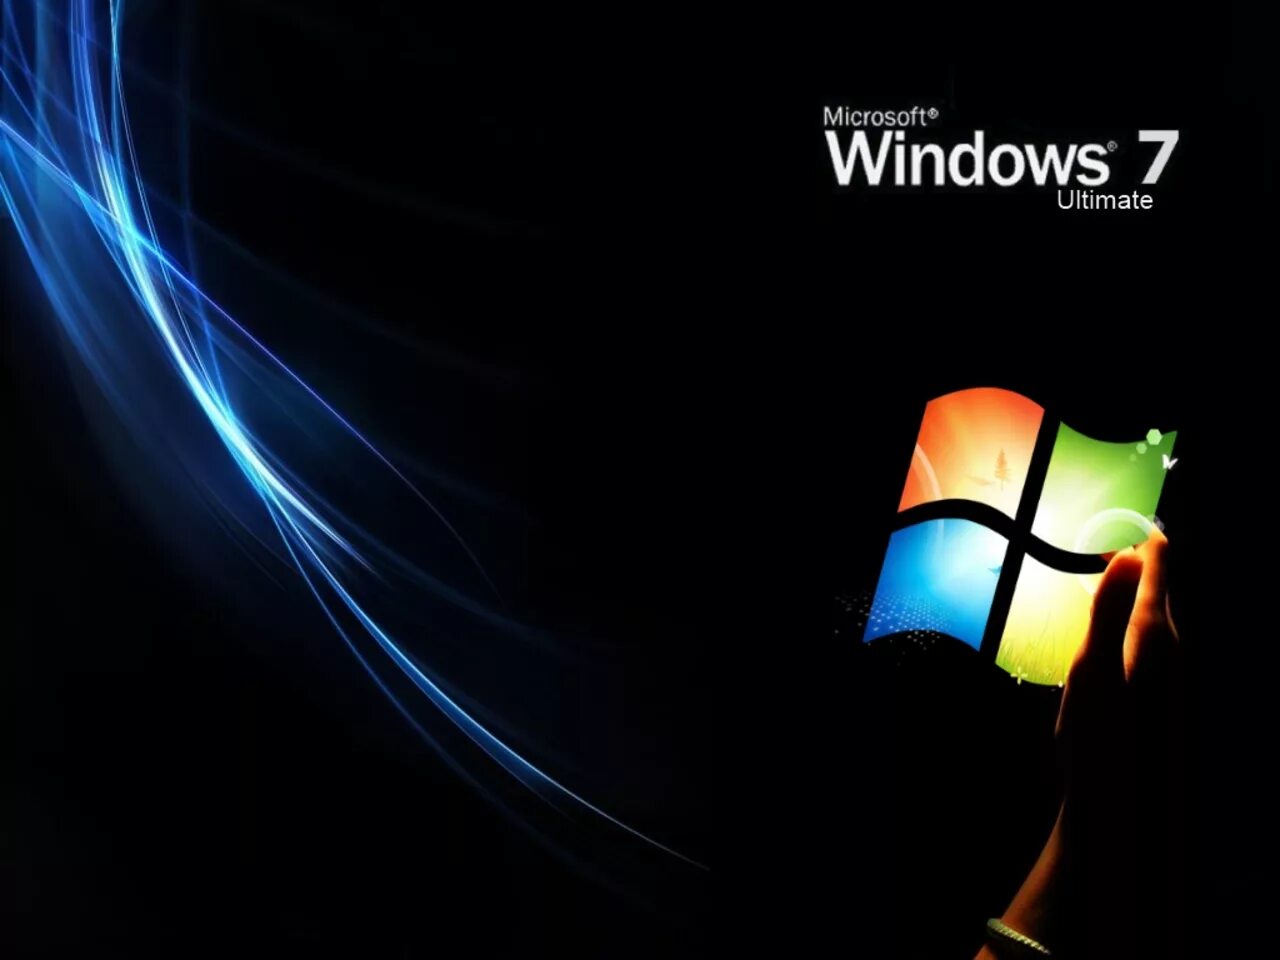 Windows семерка. Виндовс 7. Обои Windows 7. Виндовс 7 ультиматум. Windows 7 максимальная Ultimate.